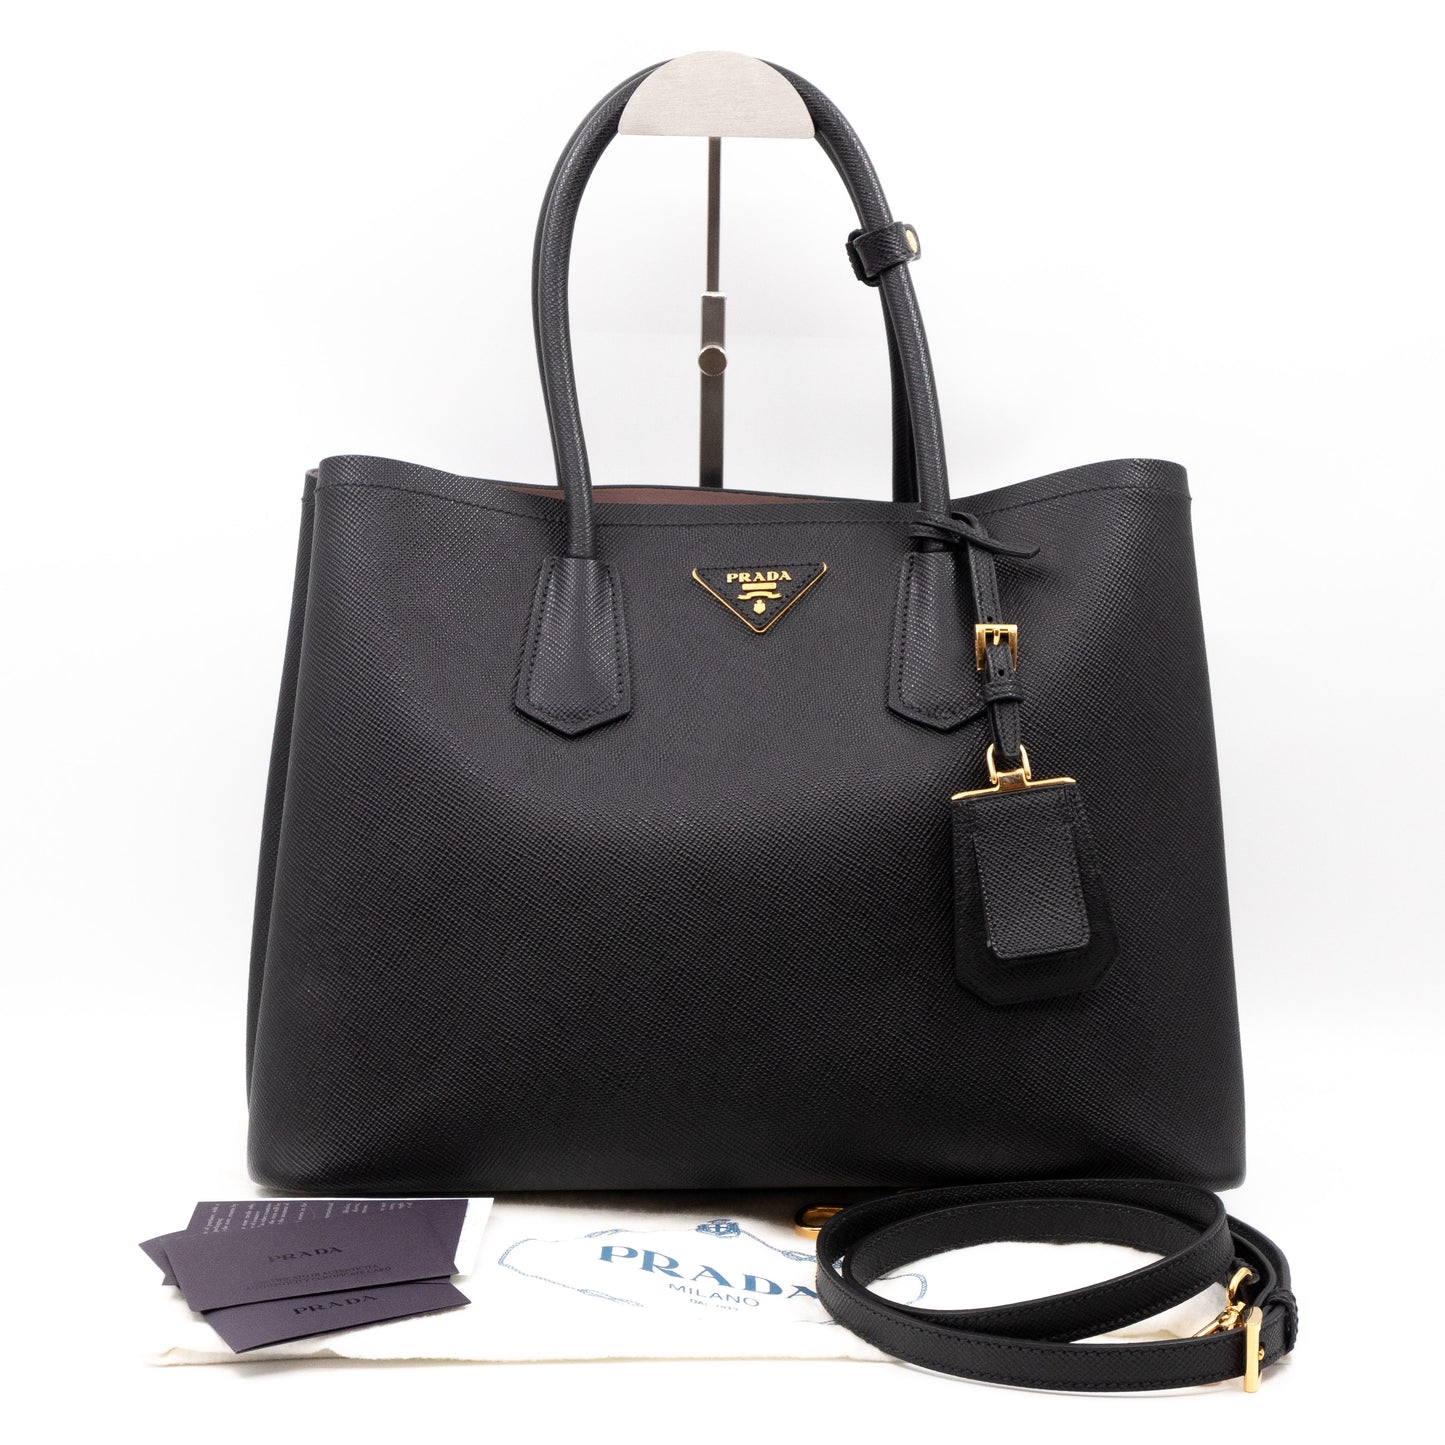 Double Bag Large Black Saffiano Leather